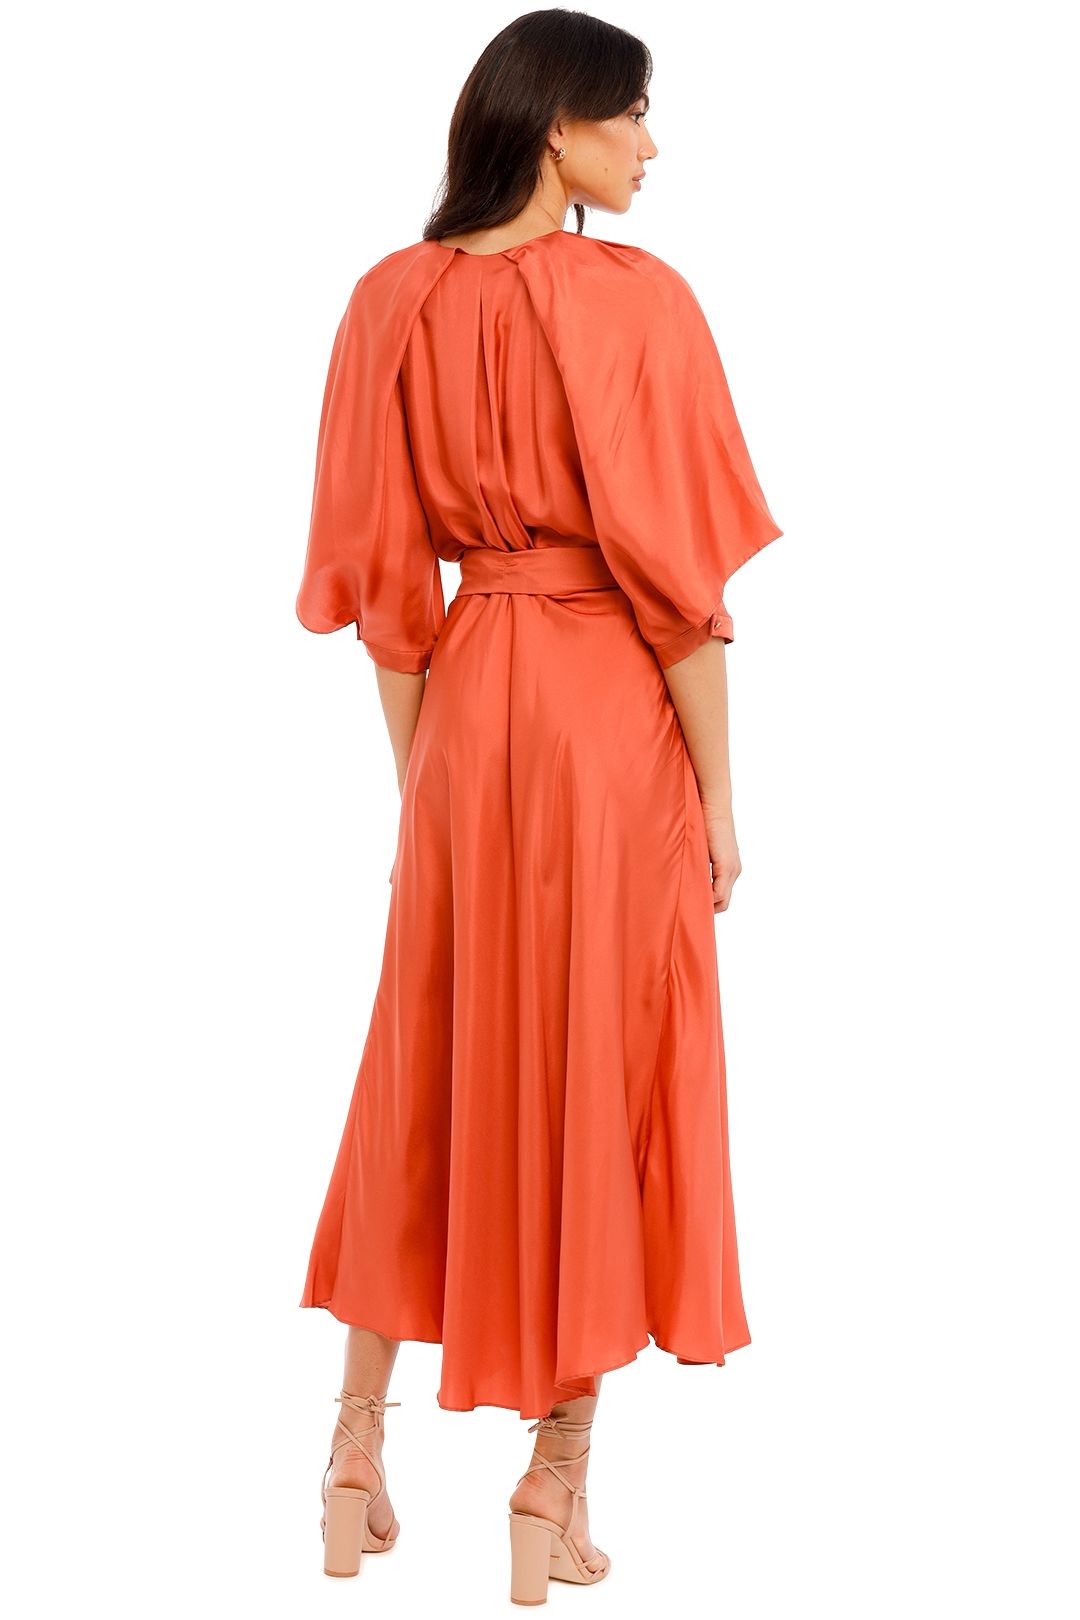 LTS Tall Women's Dark Red Long Sleeve Wrap Dress